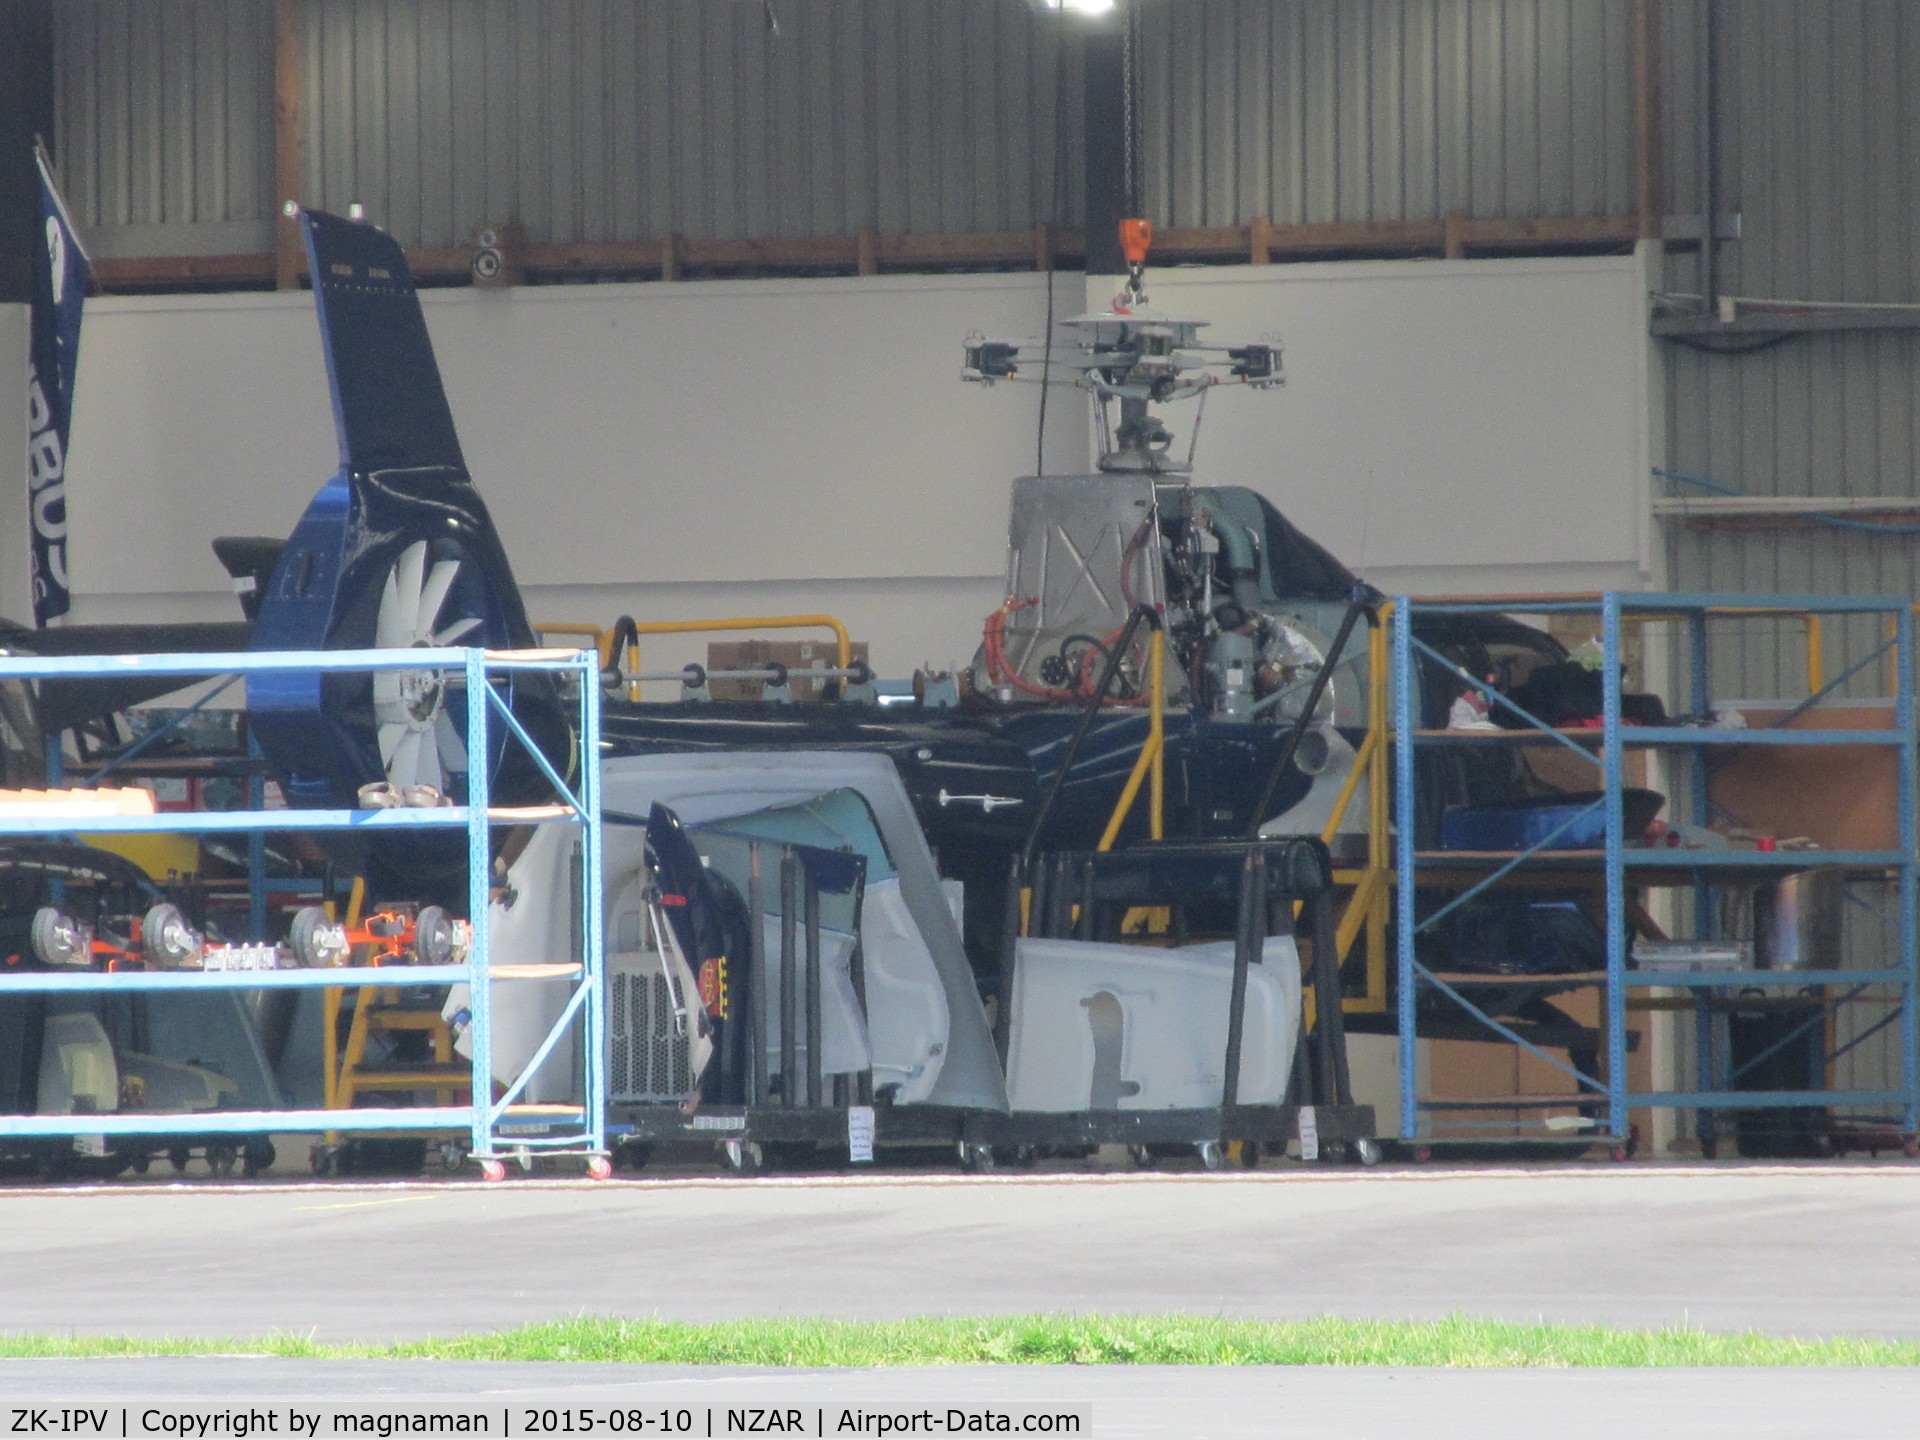 ZK-IPV, 2015 Airbus Helicopters EC-130T-2 C/N 8145, undergoing maintenance in airbus hangar